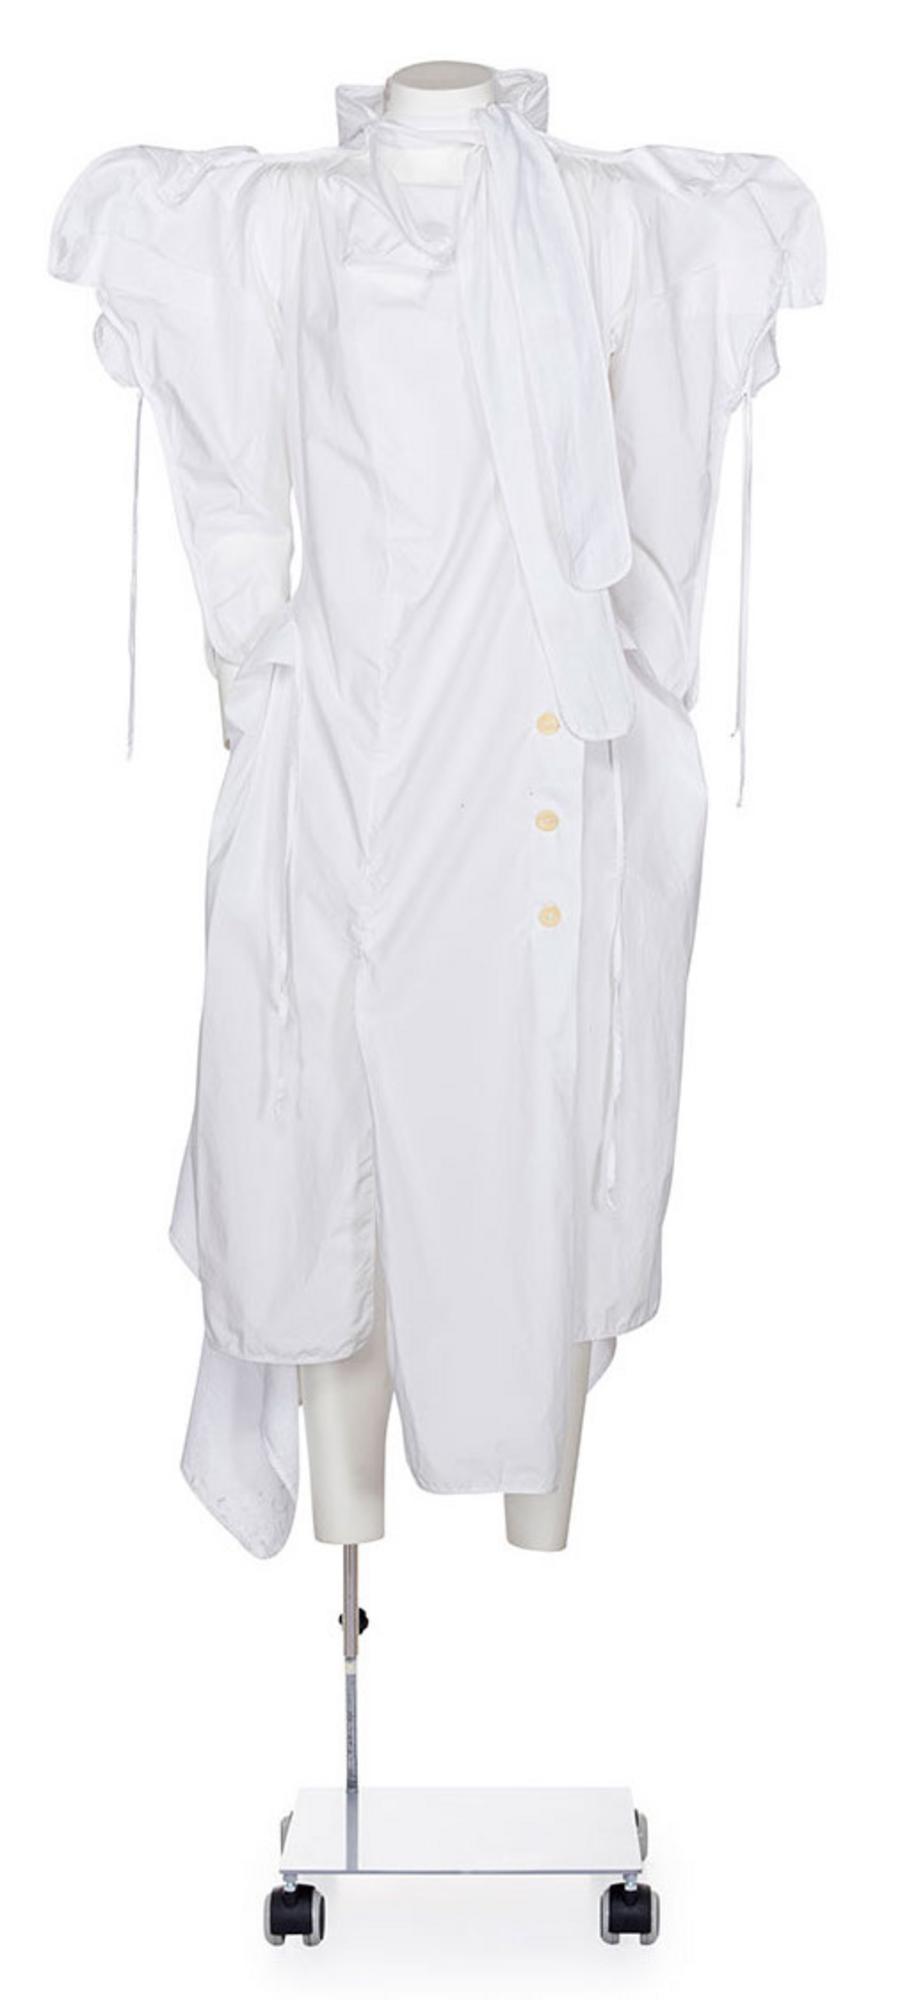 Vivienne Westwood RARE DRAPED POPLIN DRESS Description: Rare draped white...